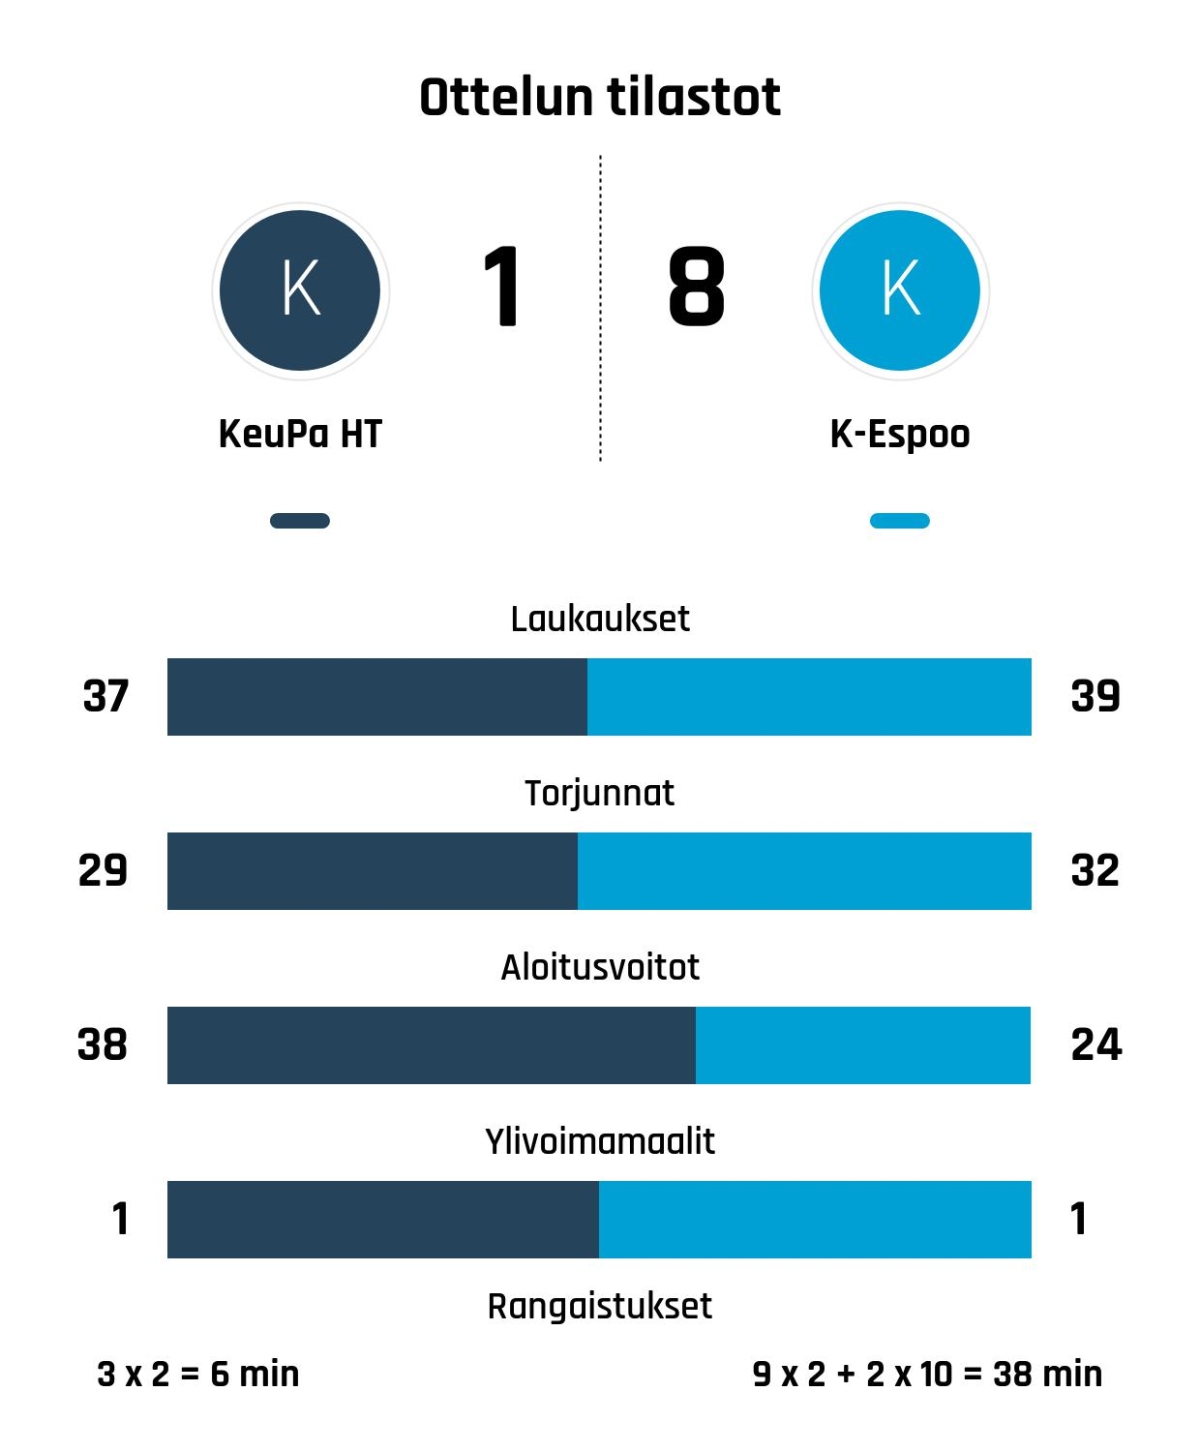 K-Espoo nappasi tylyn voiton KeuPa HT:sta